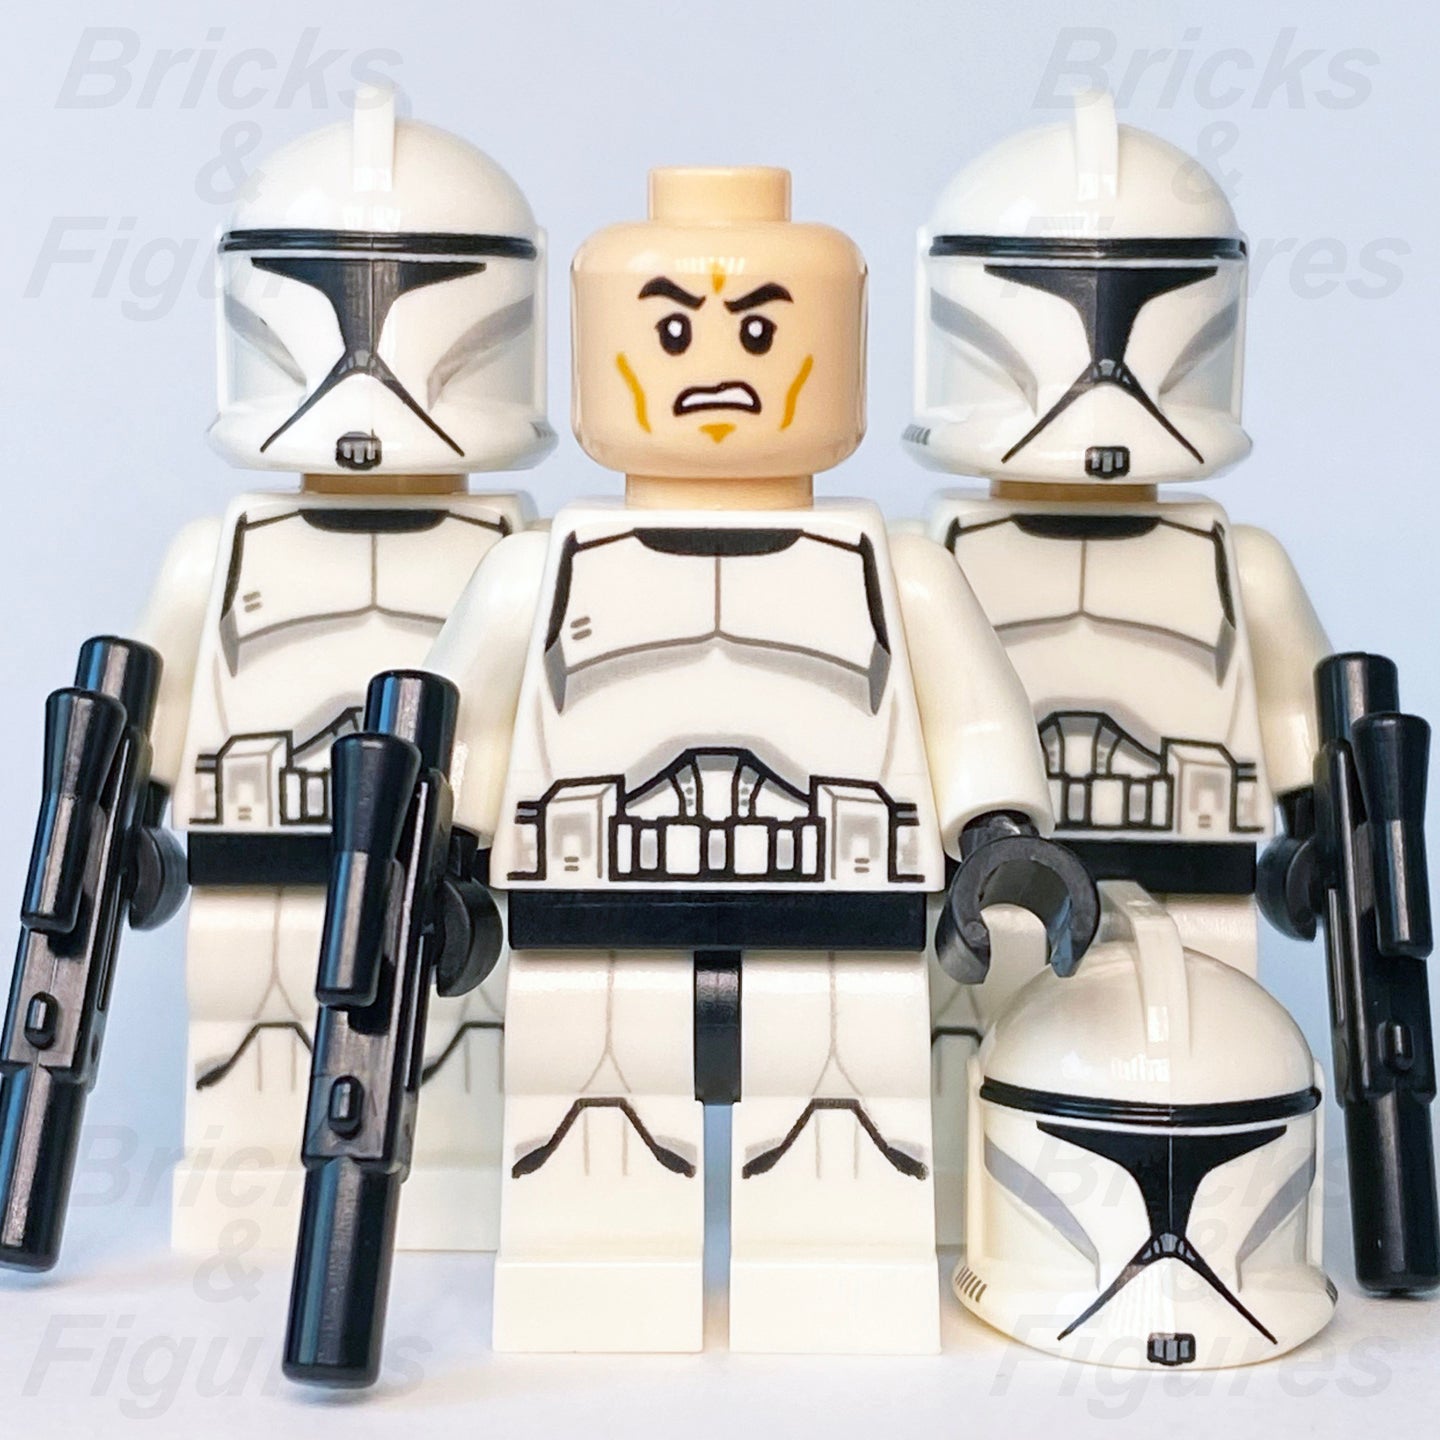 LEGO Clone Trooper Minifigures